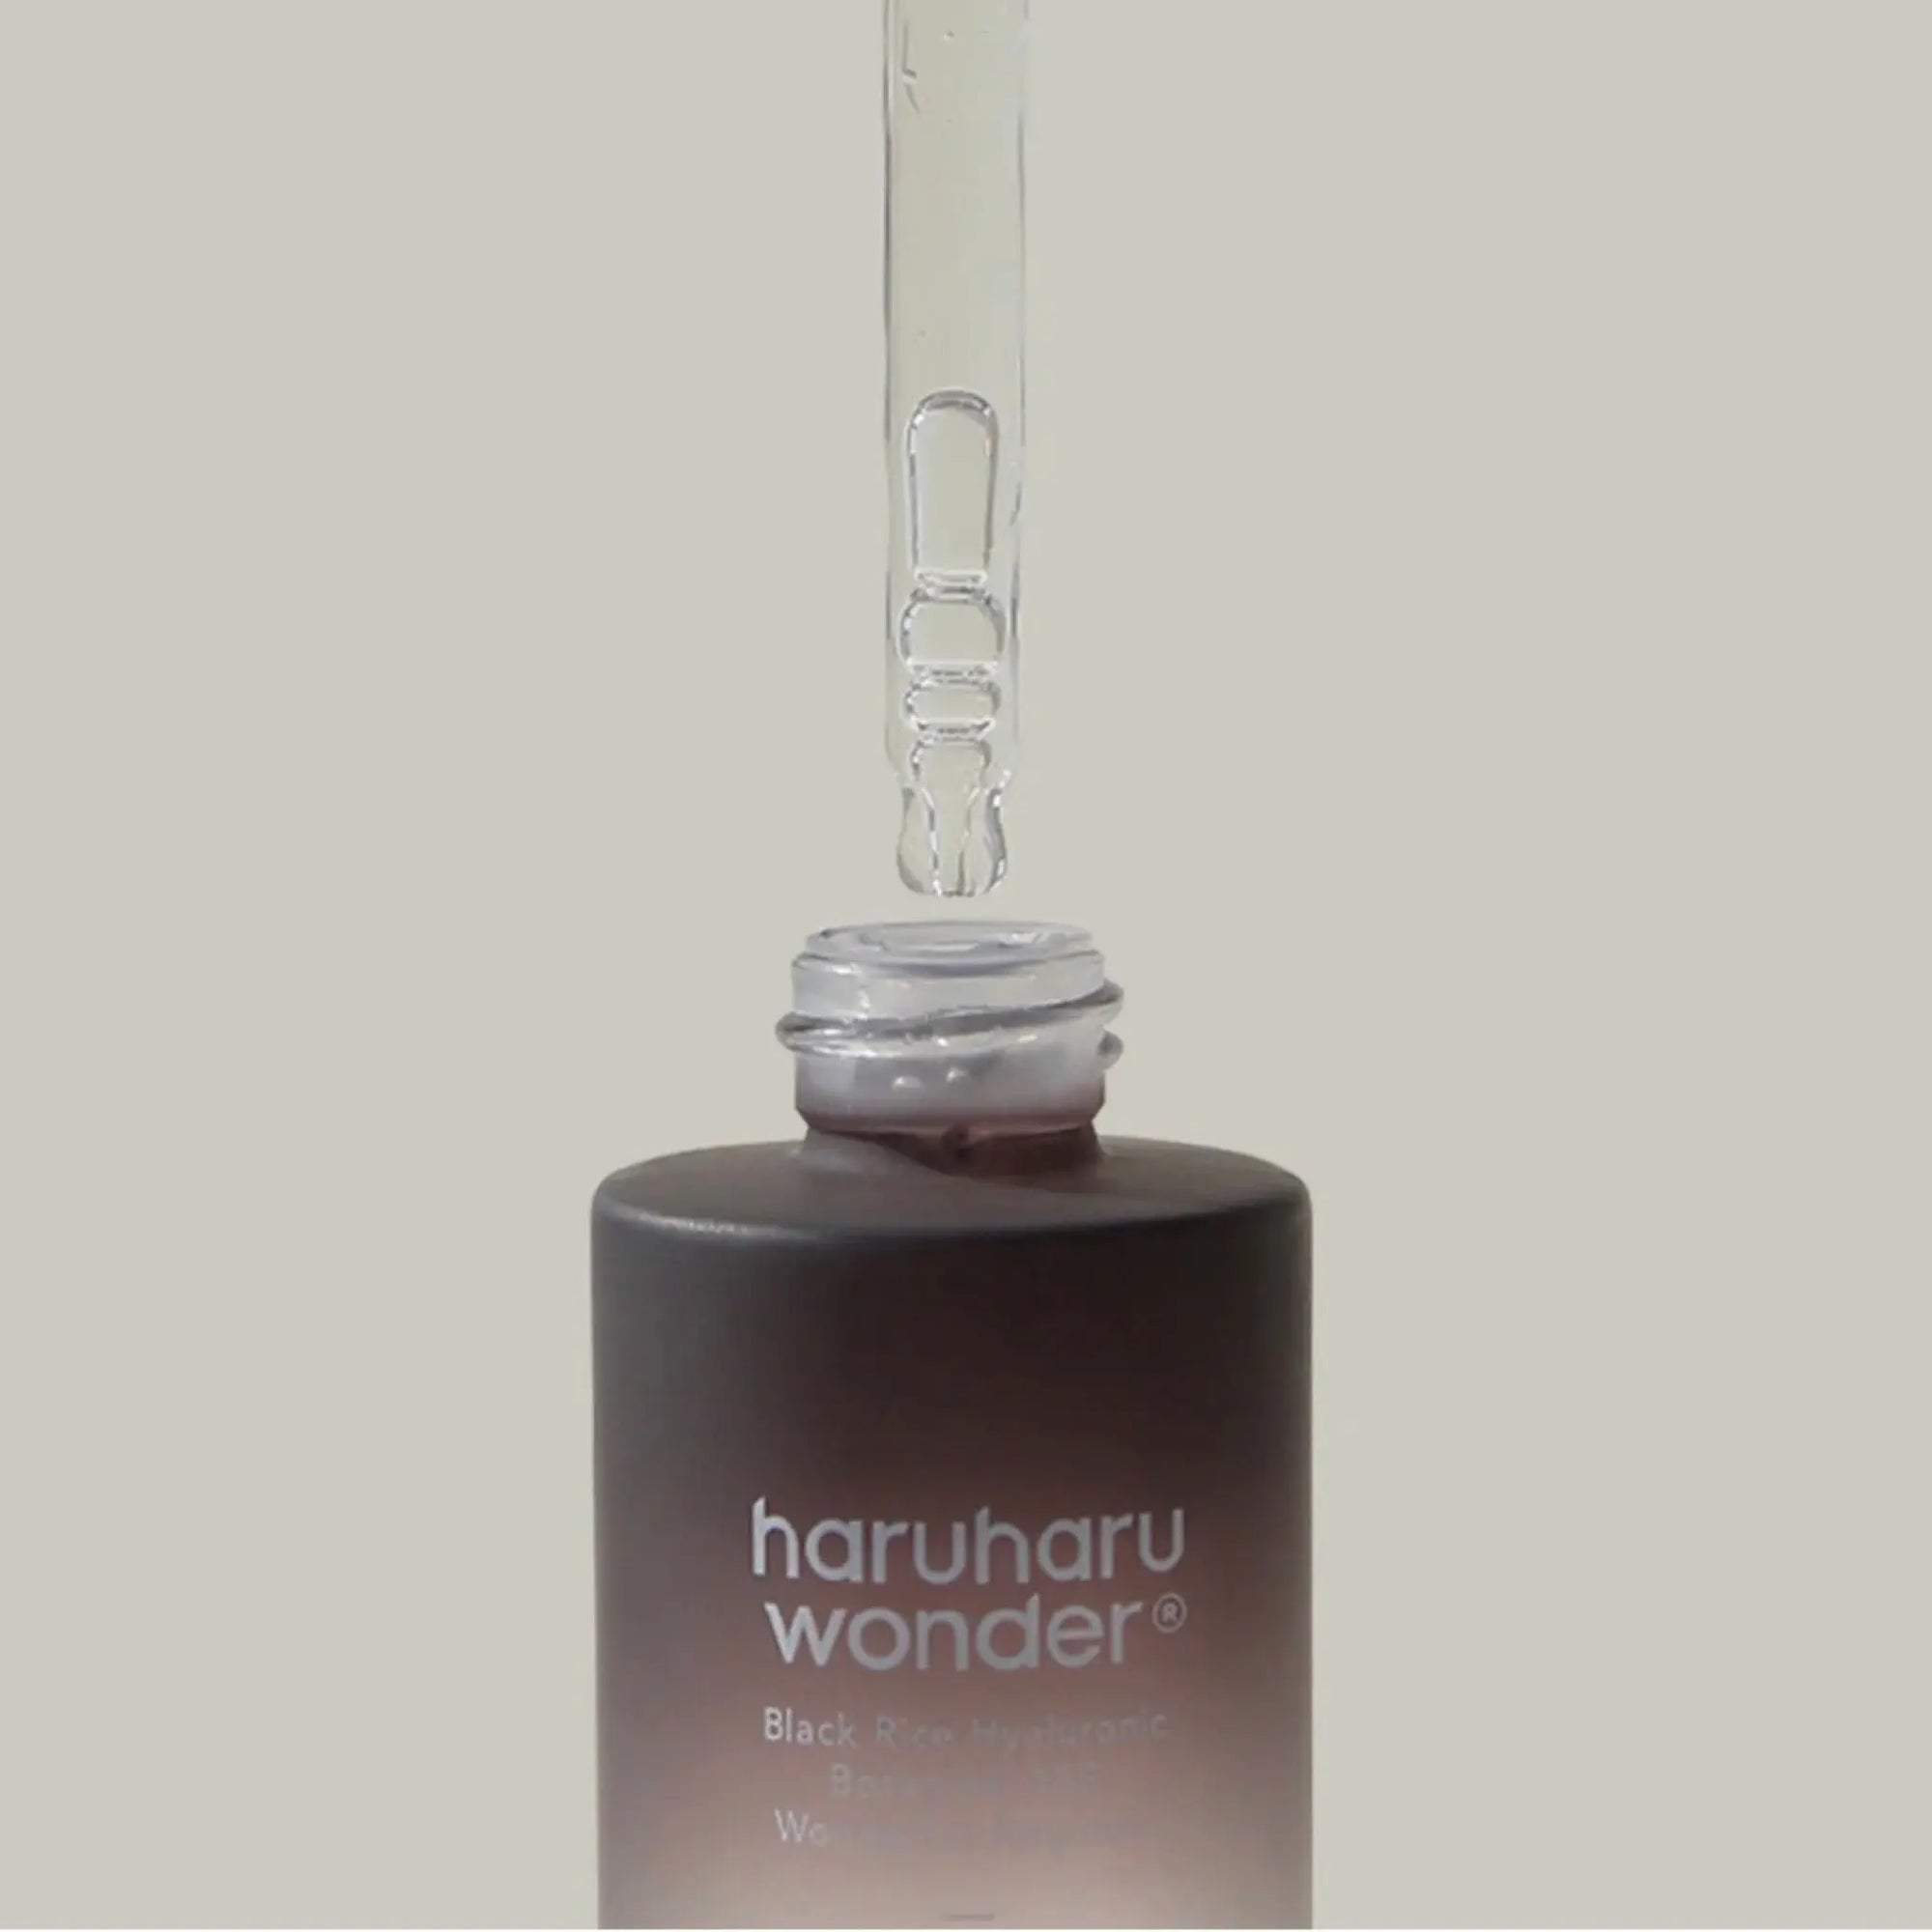 Haruharu Wonder - Black Rice Botanical 2GF Ampoule 30mL Haruharu Wonder